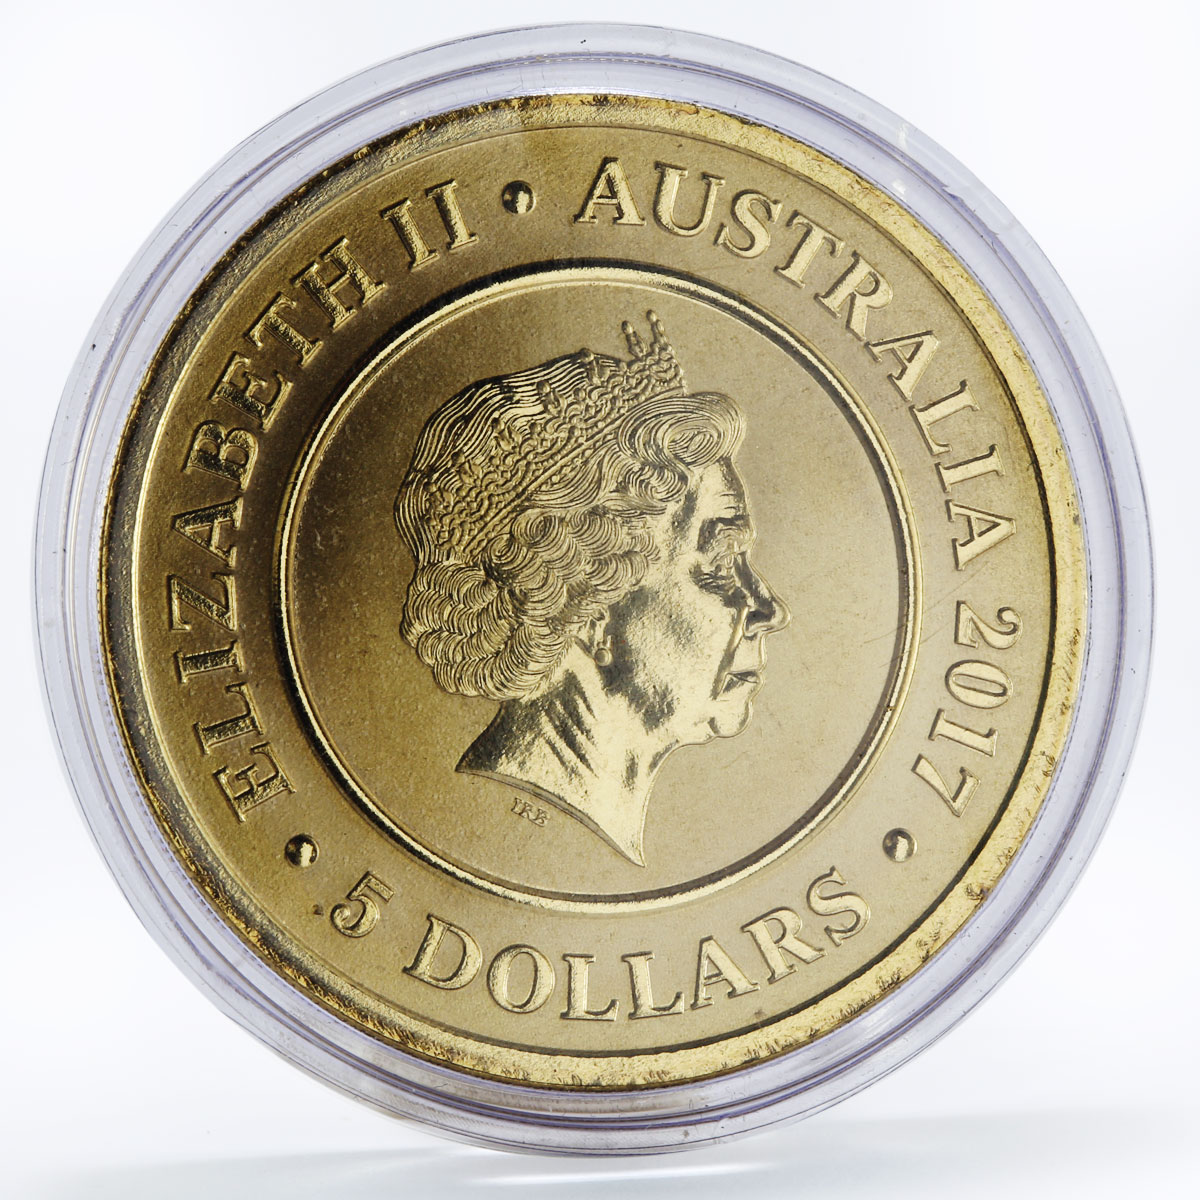 Australia 5 dollars Planetary Coins series the Sun aluminium coin 2017